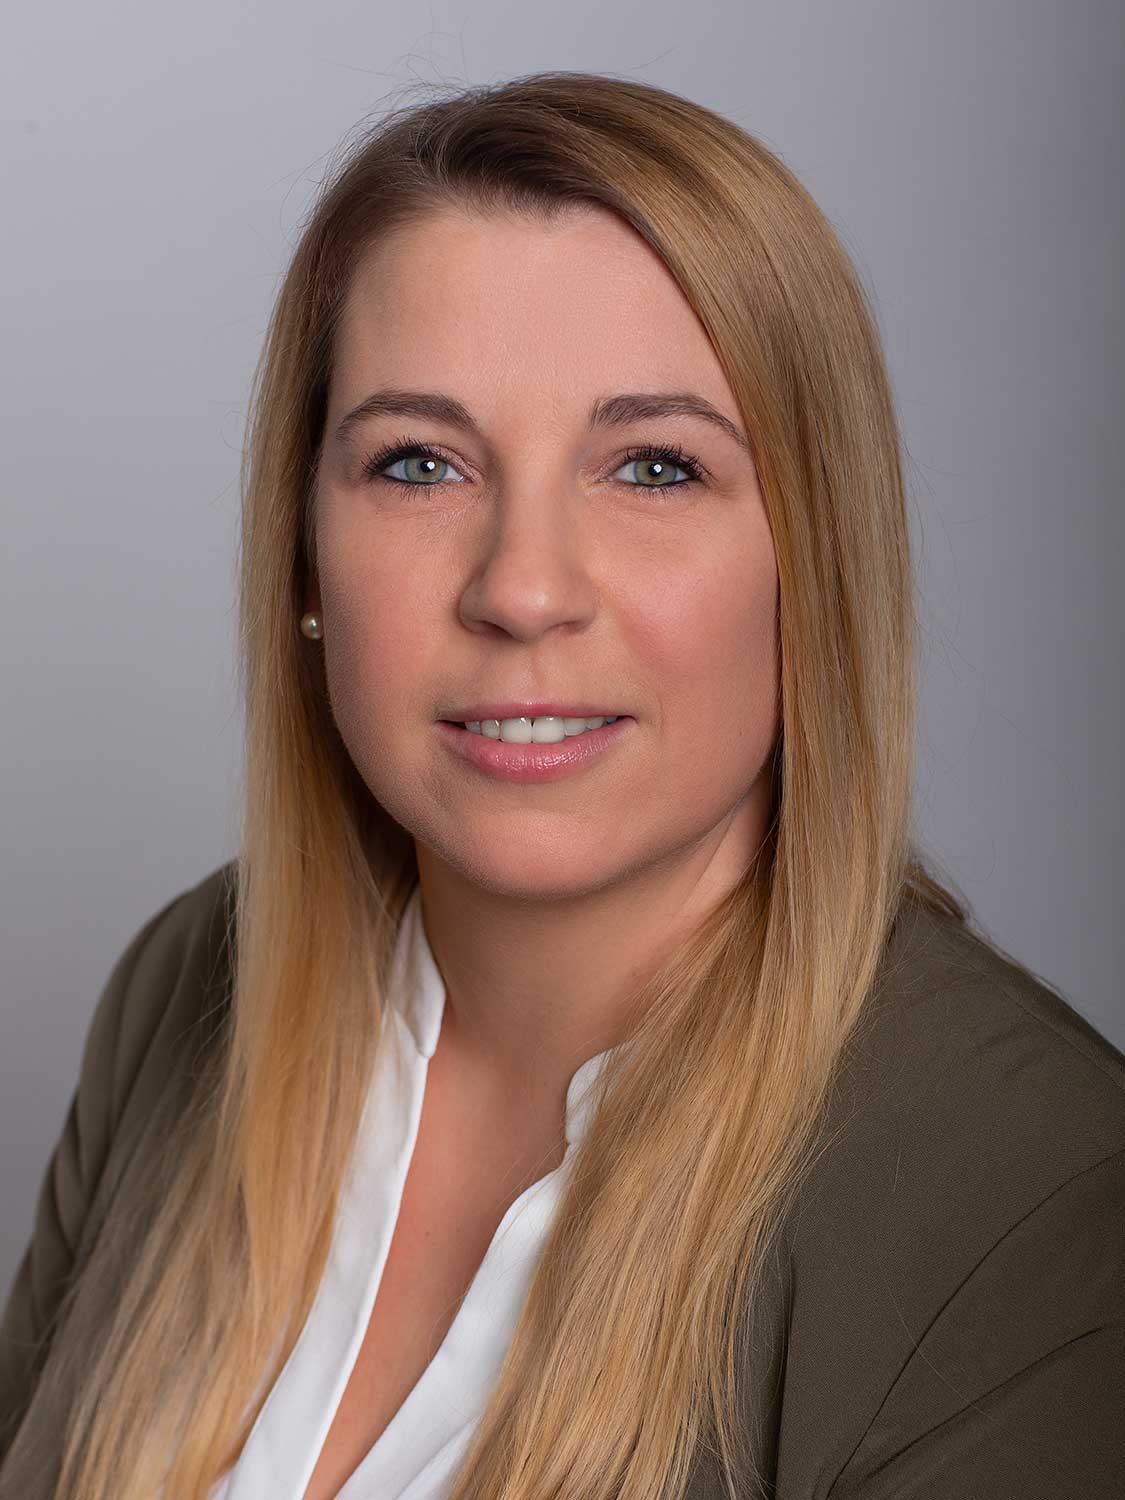 Nicole Meurer, consulente clienti aziendali presso Bürgschaftsbank NRW. 